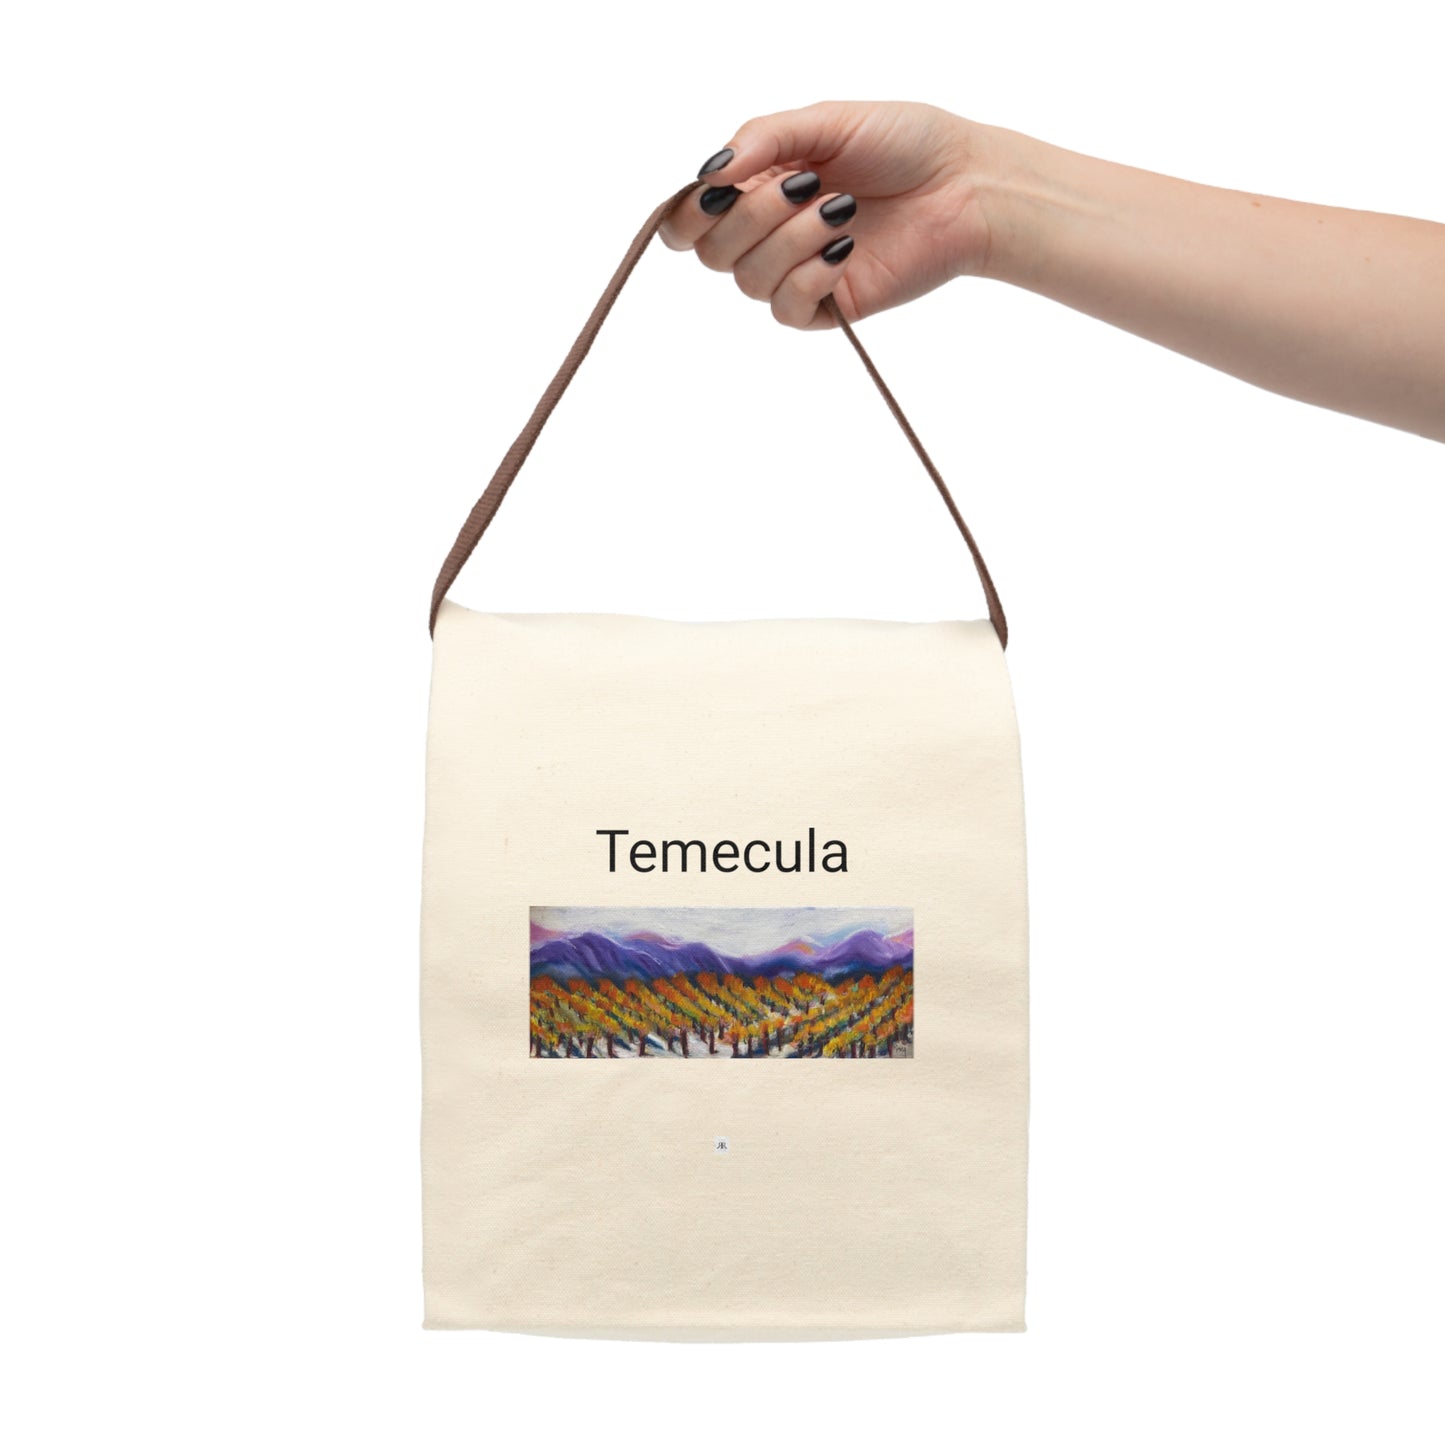 Misty Vines Temecula Souvenir Canvas Lunch Bag With Strap